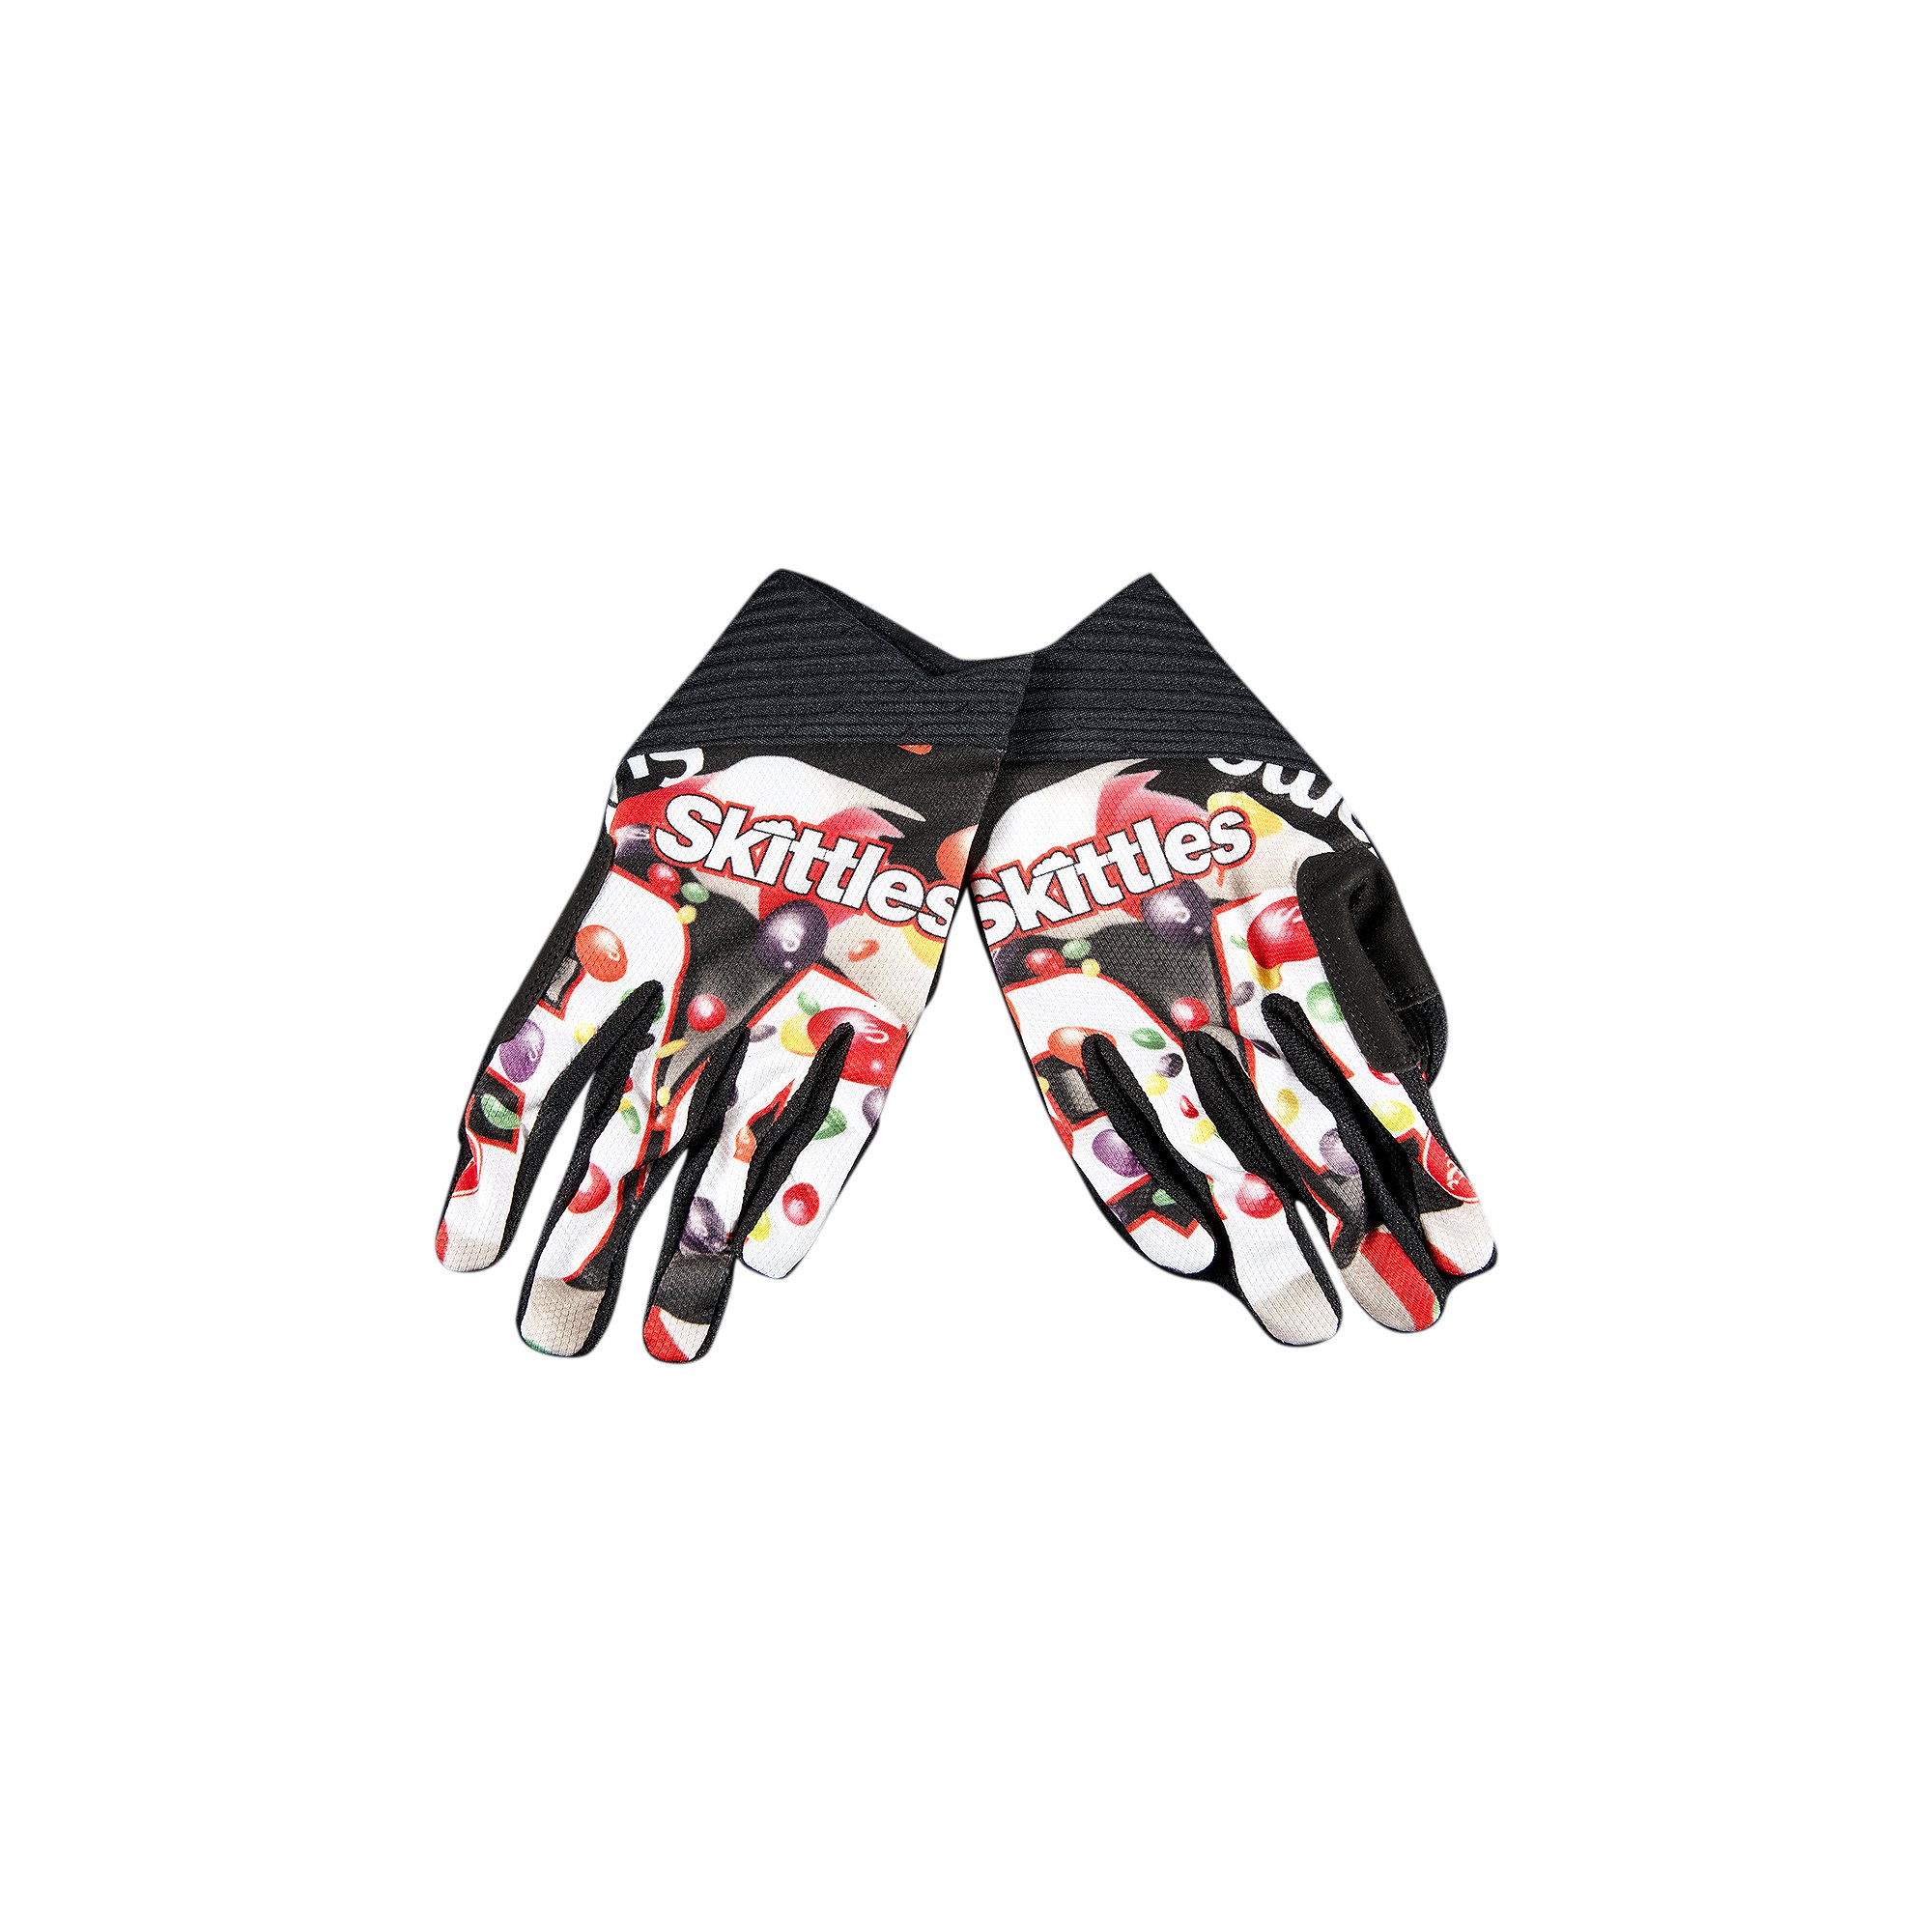 Supreme x Skittles x Castell Cycling Gloves 'Black' | GOAT